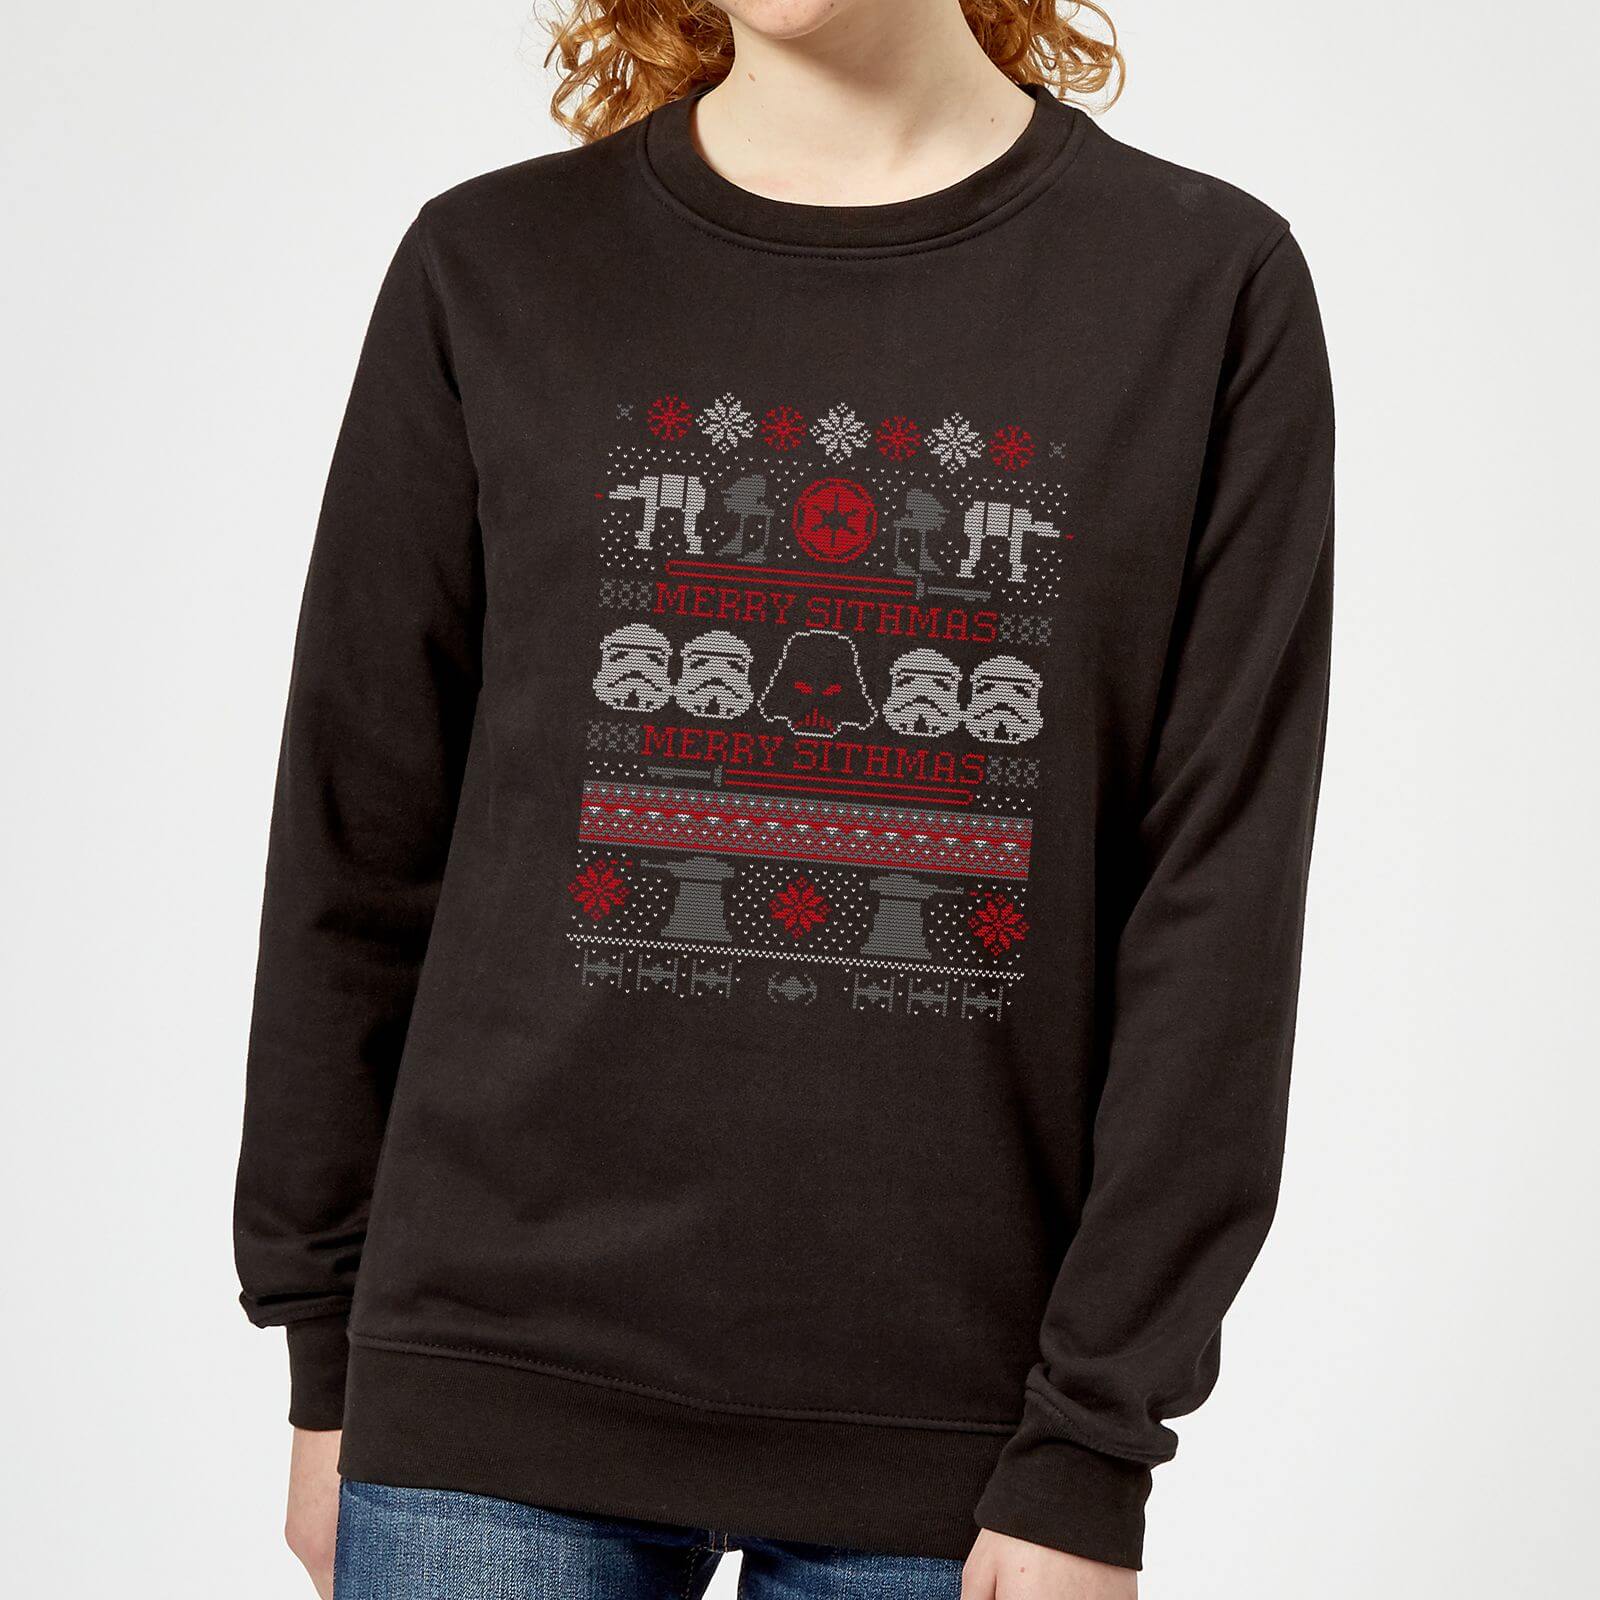 Star Wars Merry Sithmas Knit Women's Christmas Sweatshirt - Black - XL